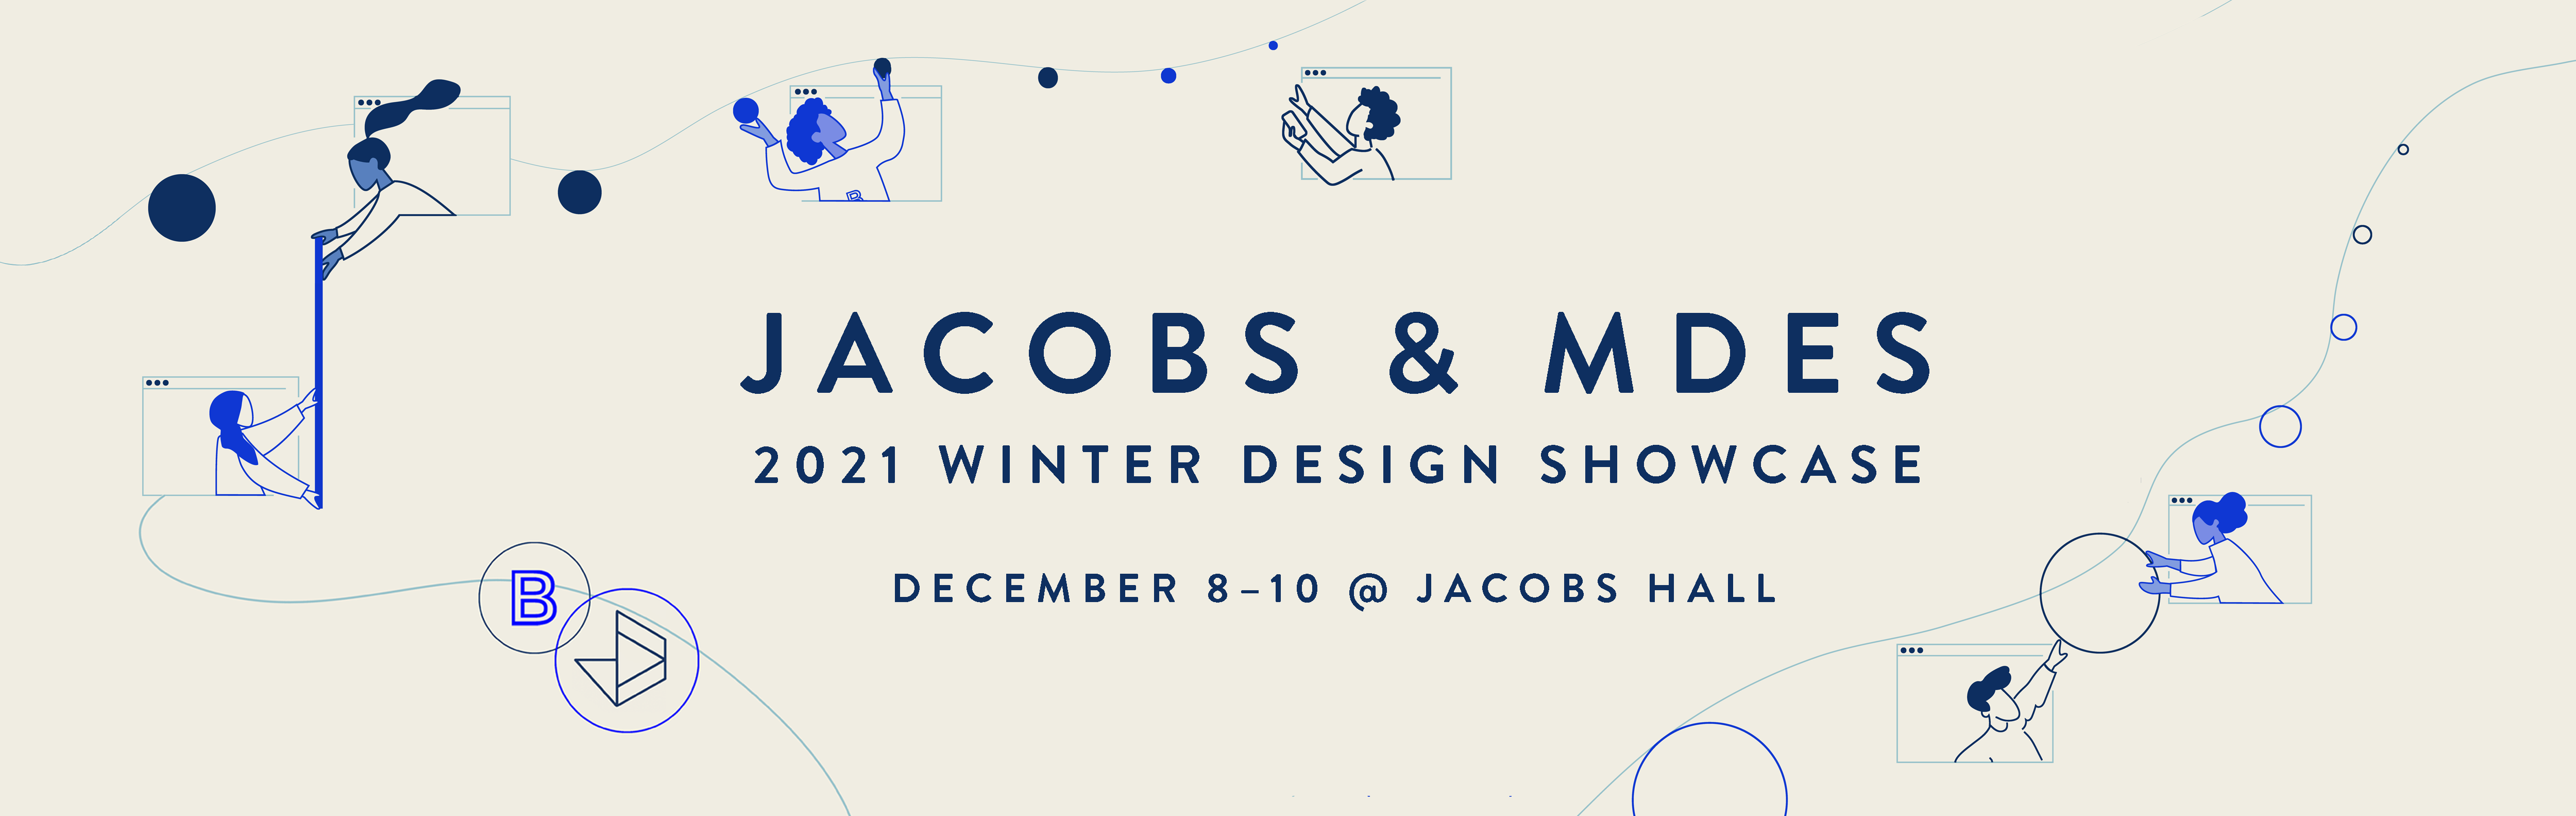 2021 Winter Design Showcase Web Banner.png